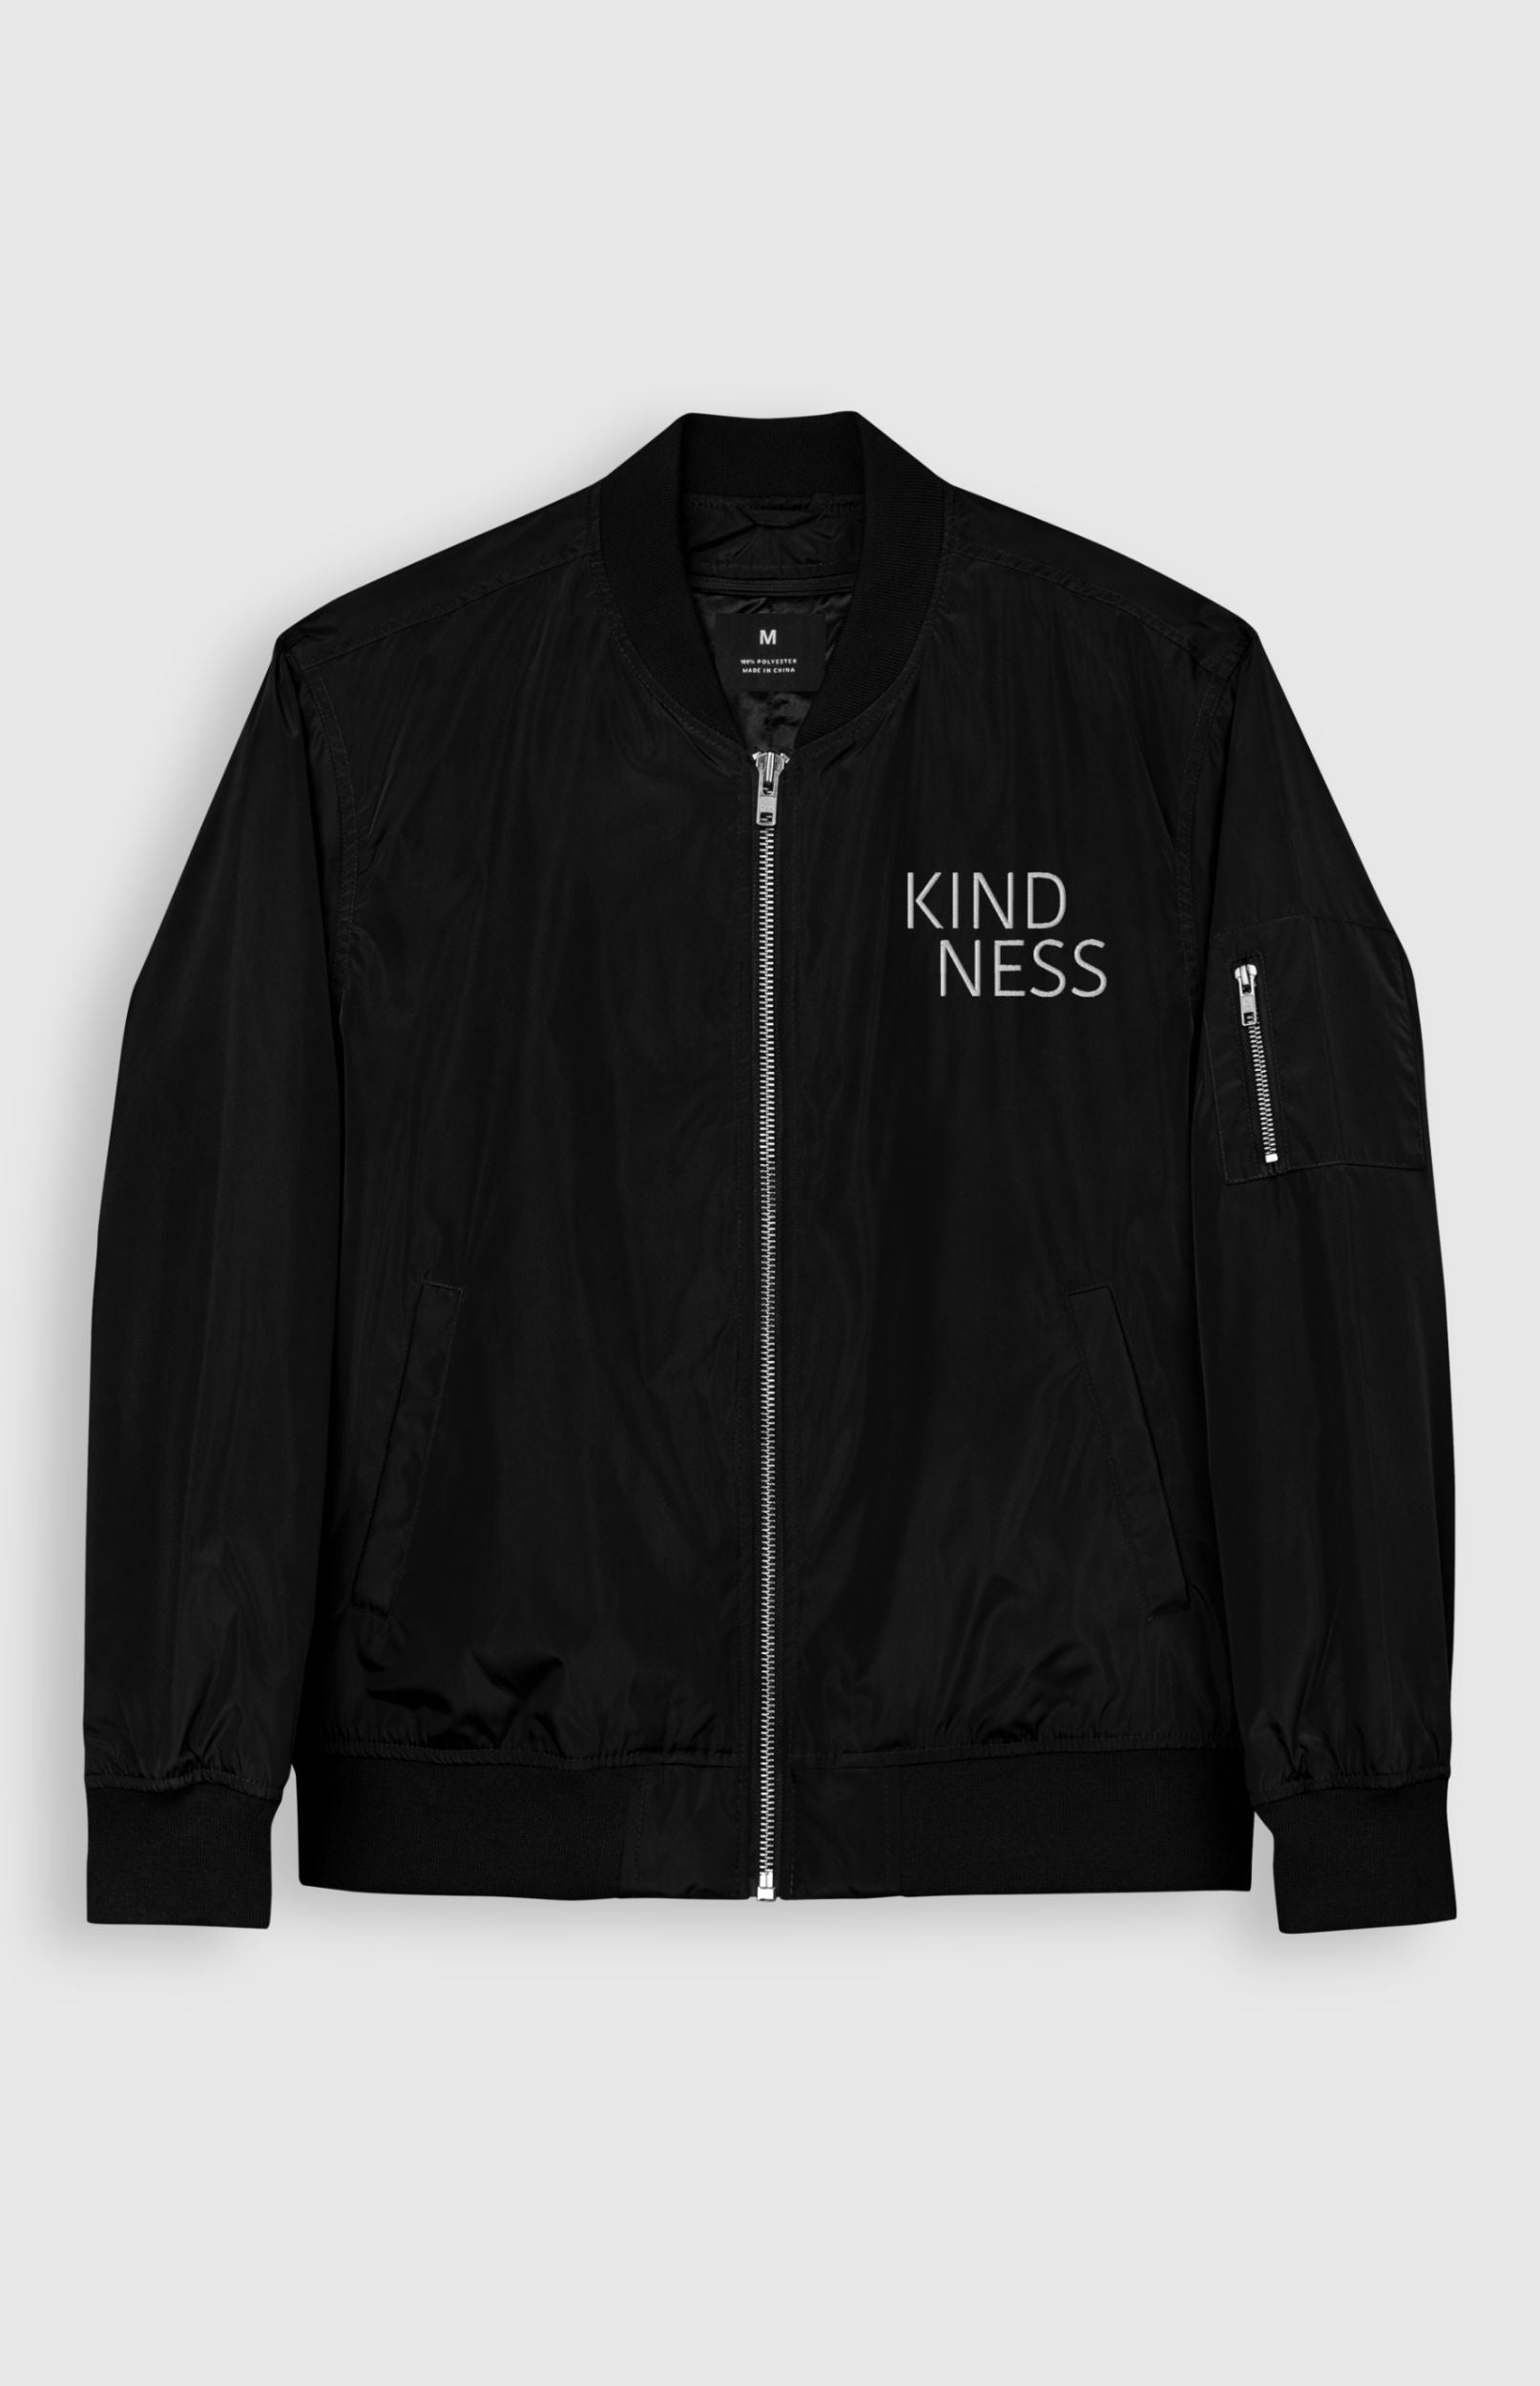 Premium Kindness Jacket